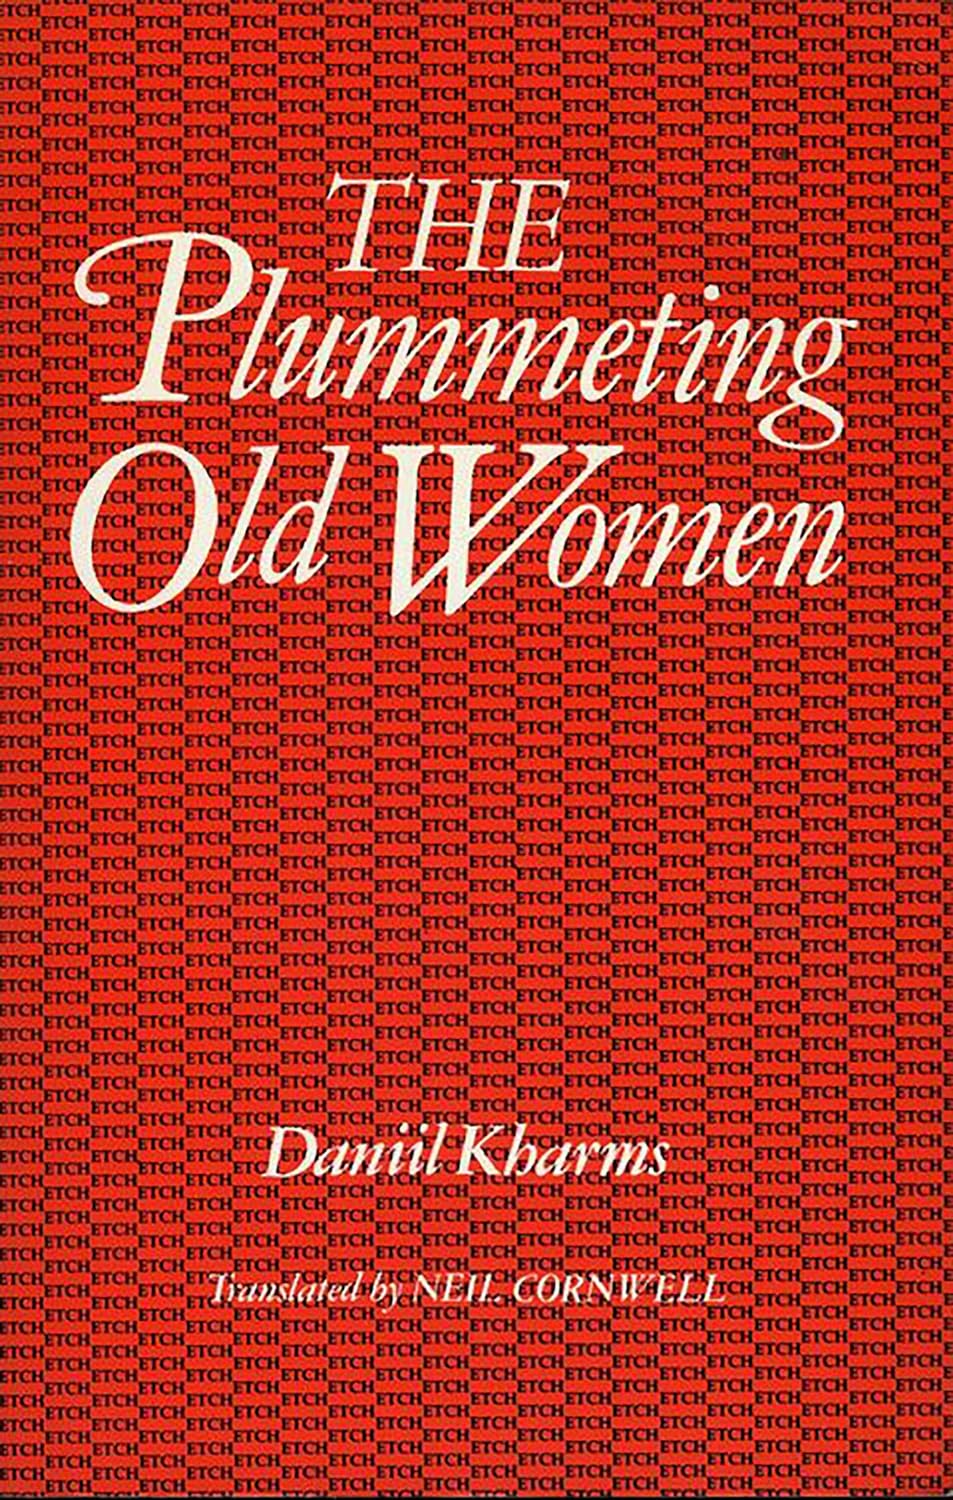 Kharms, Daniil: The plummeting old women (1989, Lilliput Press)